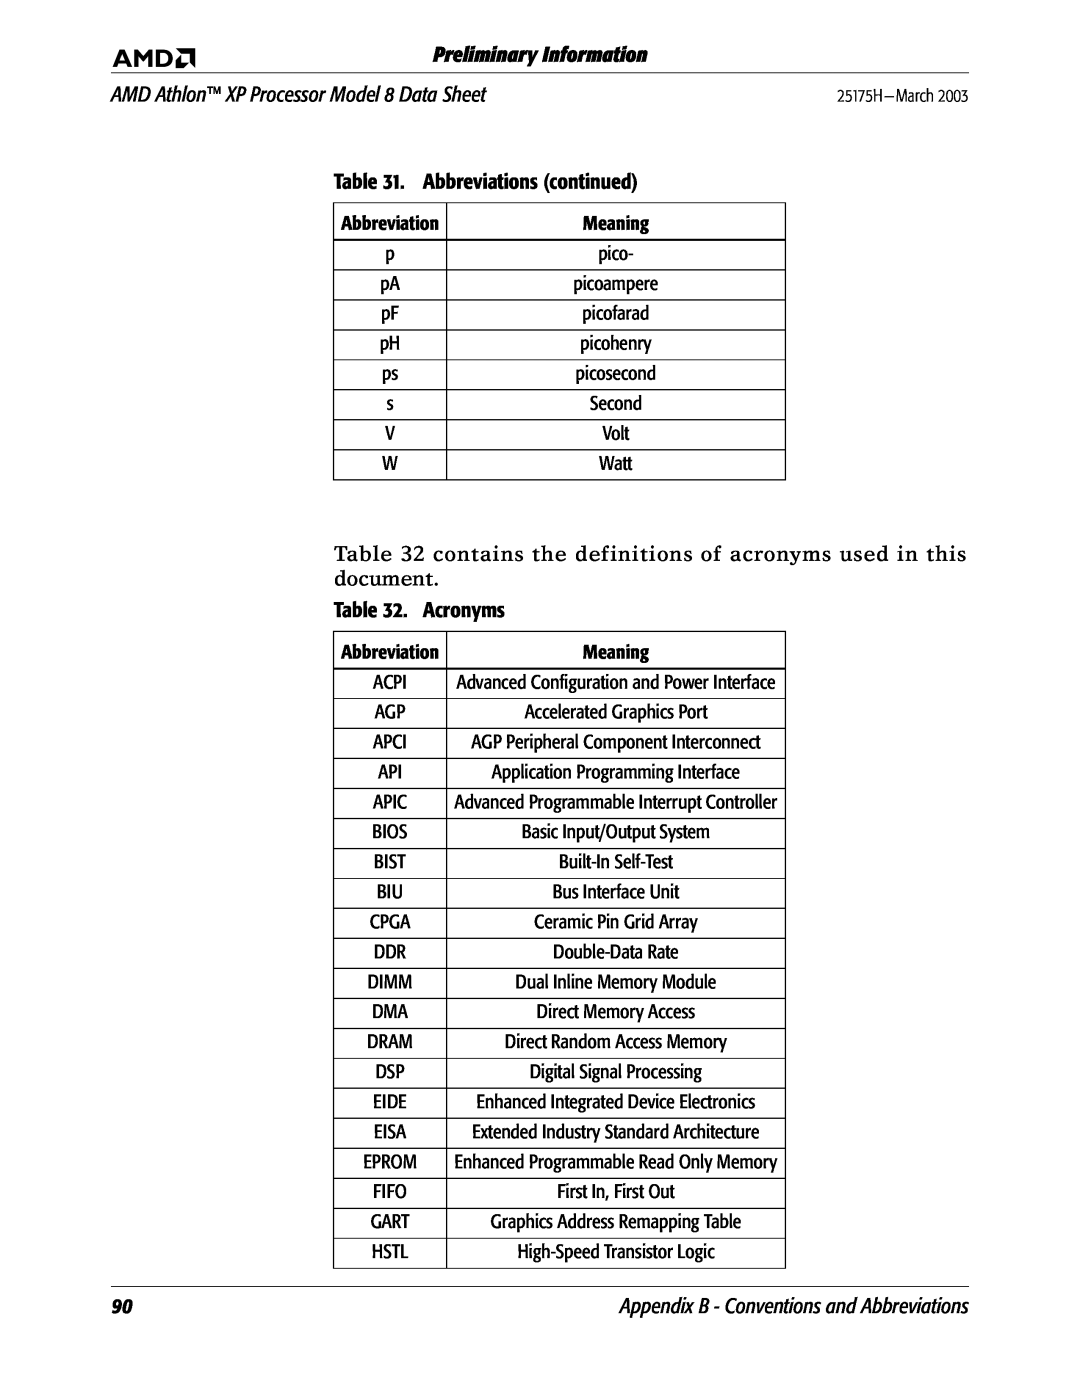 AMD manual Abbreviations continued, Acronyms, Preliminary Information, AMD Athlon XP Processor Model 8 Data Sheet 